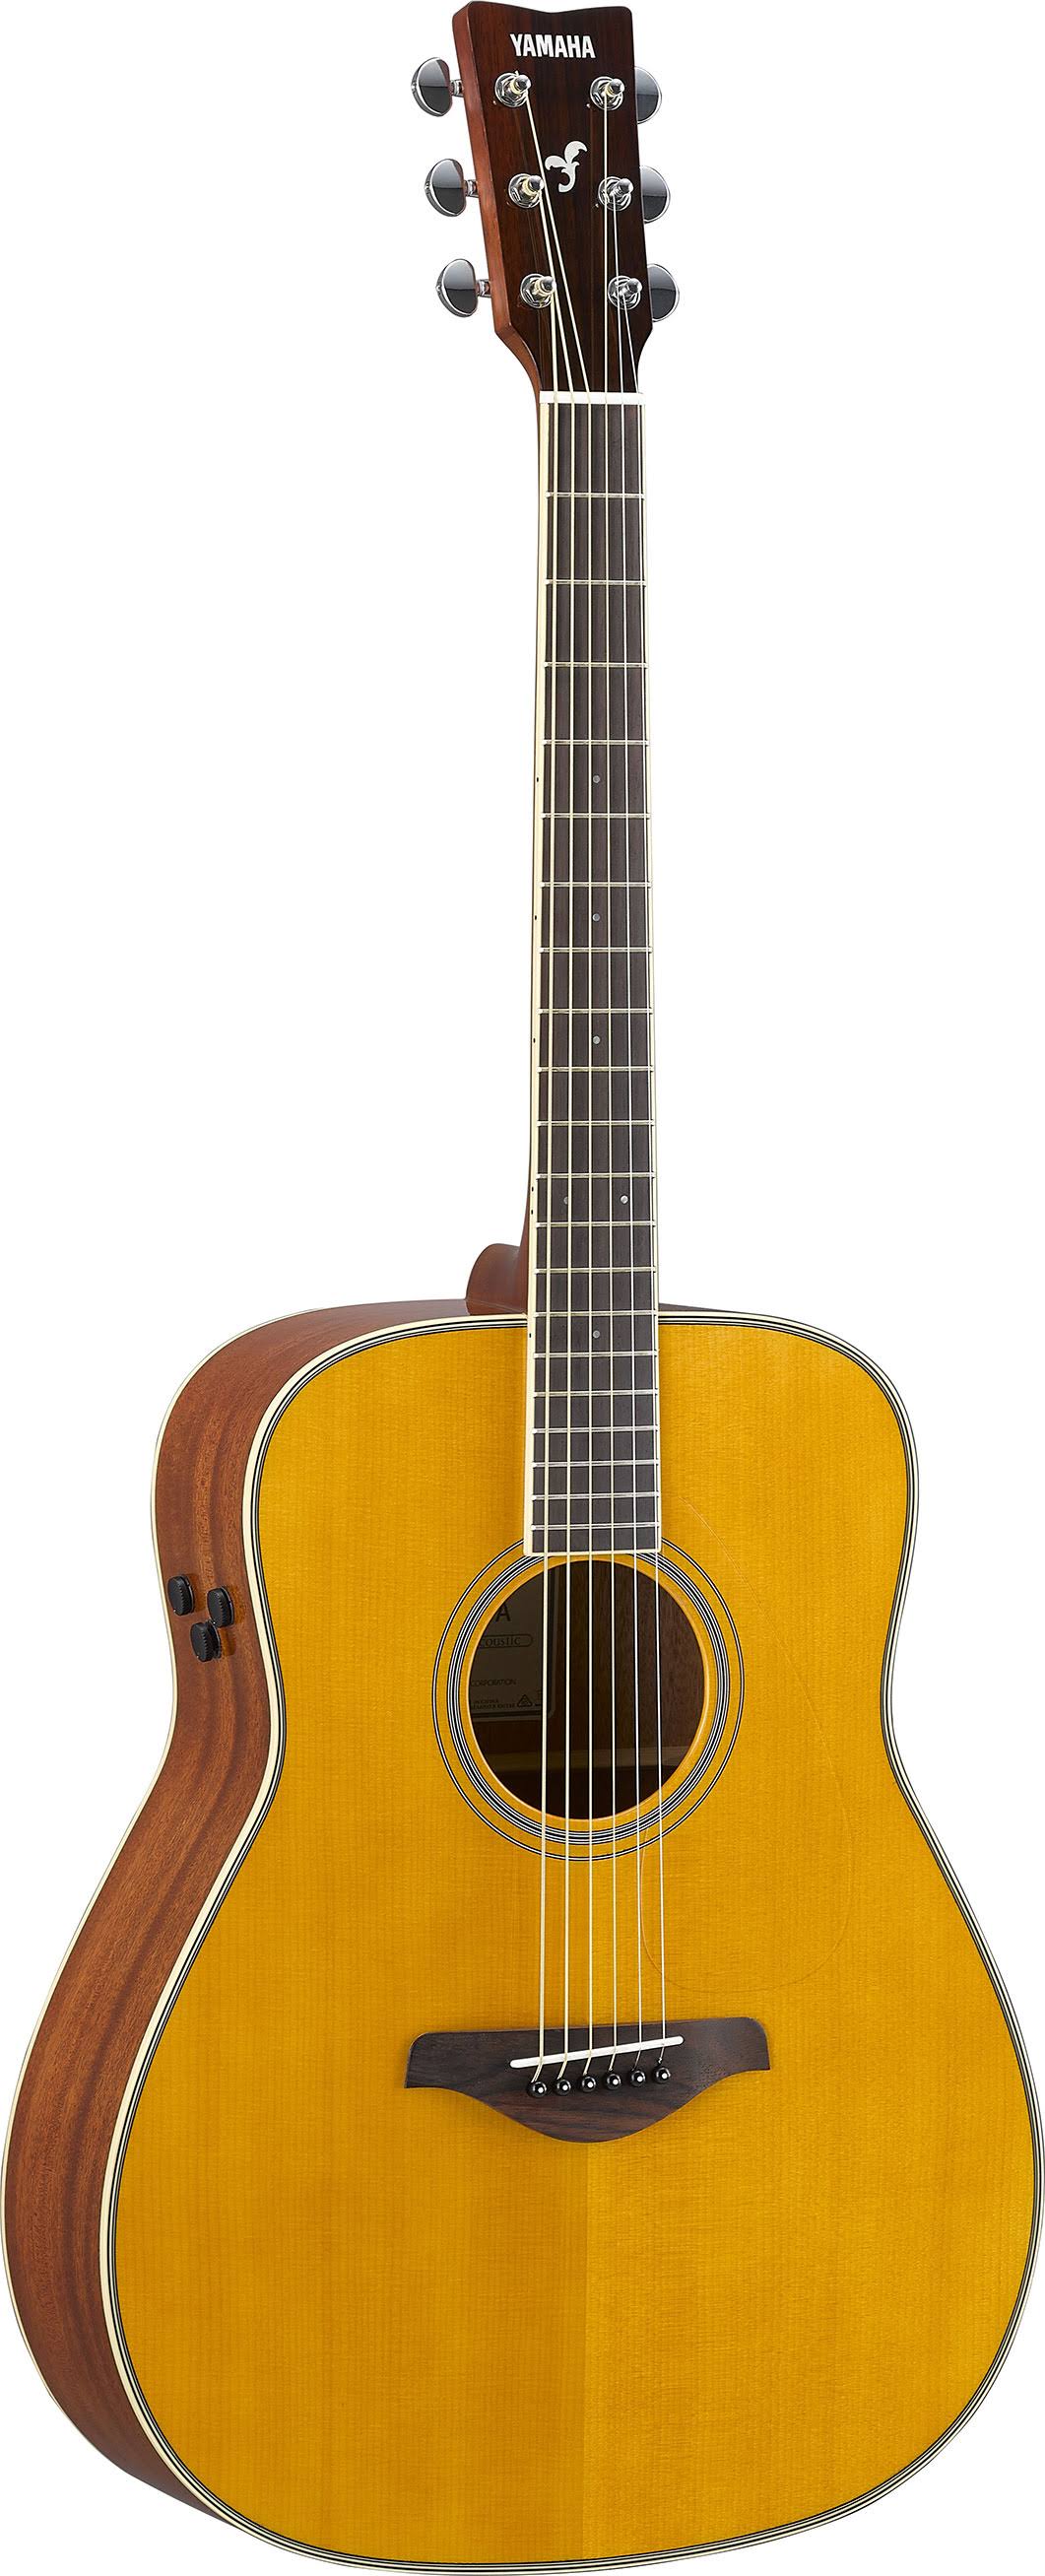 Yamaha FGTA Transacoustic Guitar - Vintage Tint